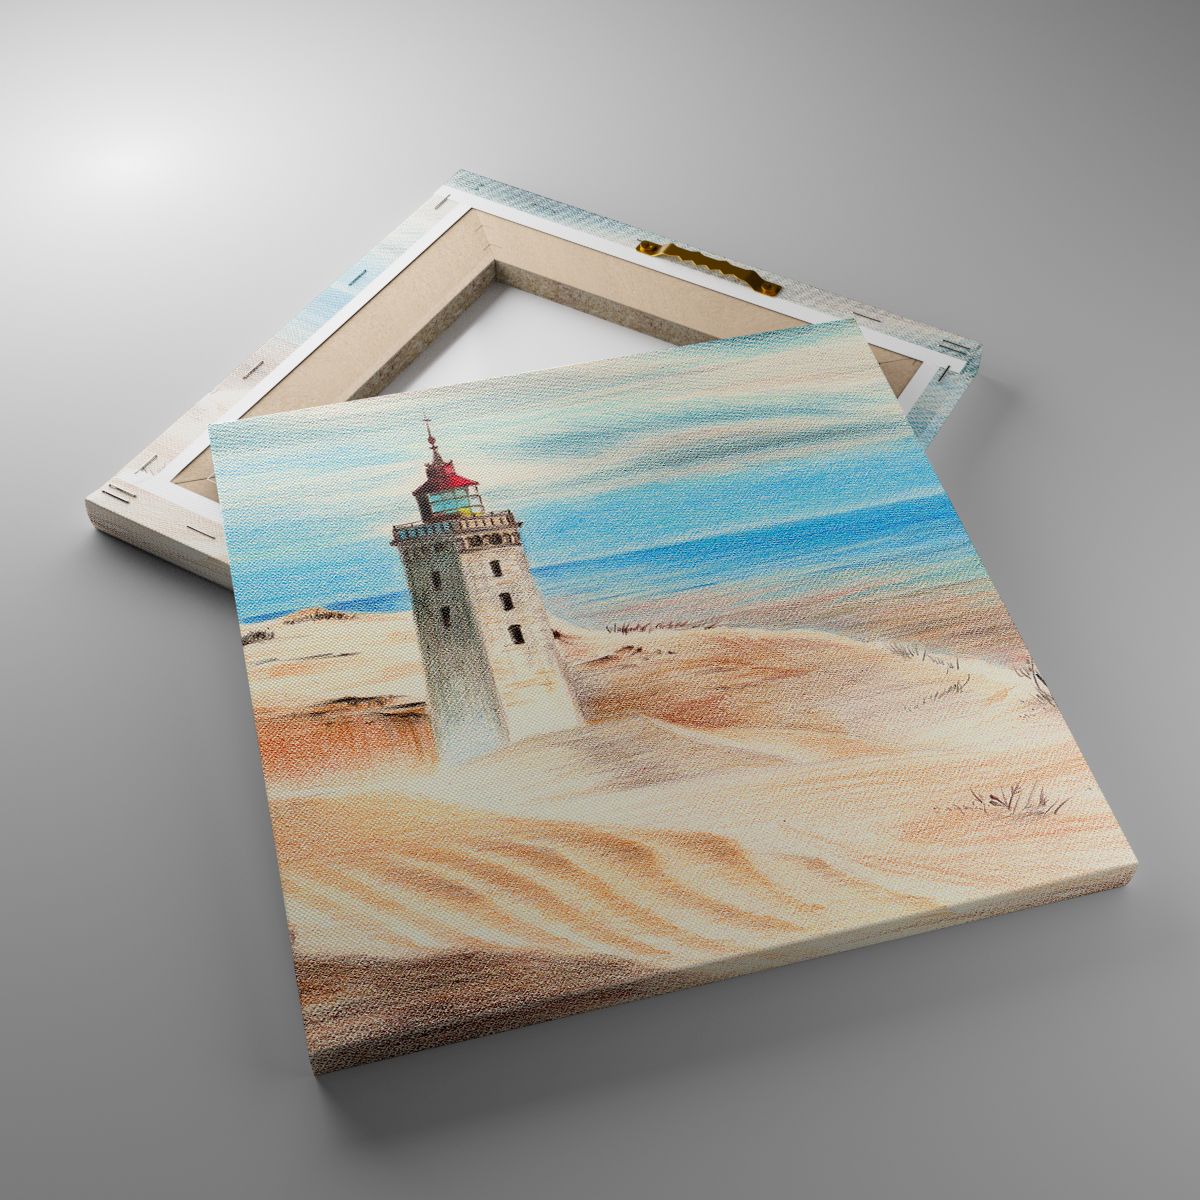 Leinwandbild Leuchtturm, Leinwandbild Strand, Leinwandbild Meer, Leinwandbild Düne, Leinwandbild Malerei